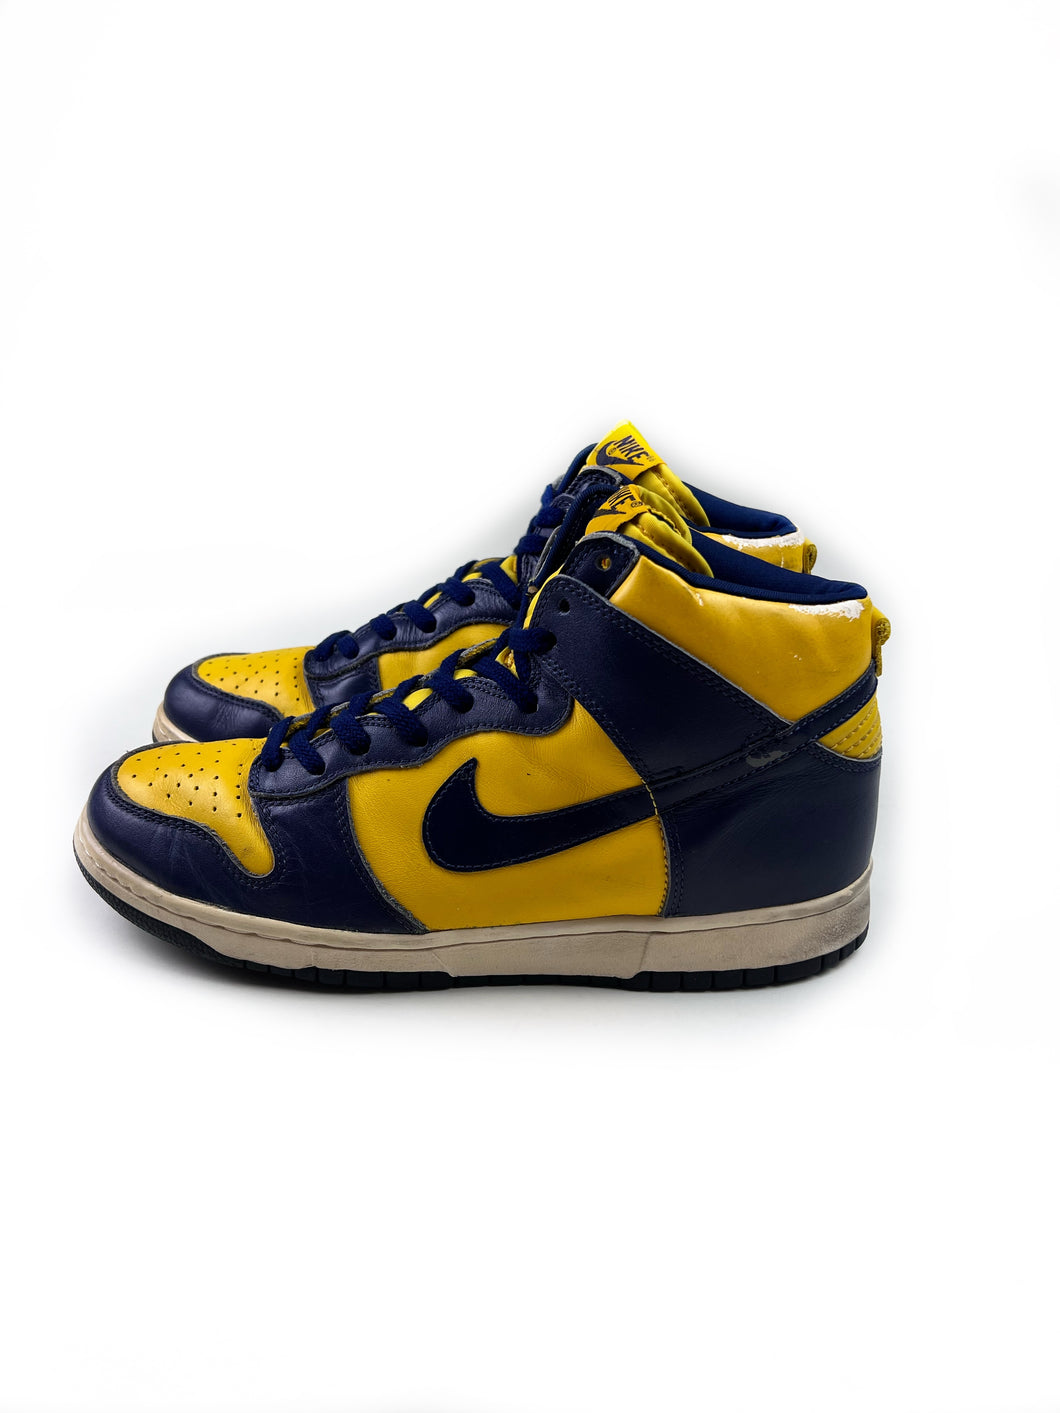 Vintage 1998 Nike Dunk High LE Michigan - Size 10.5